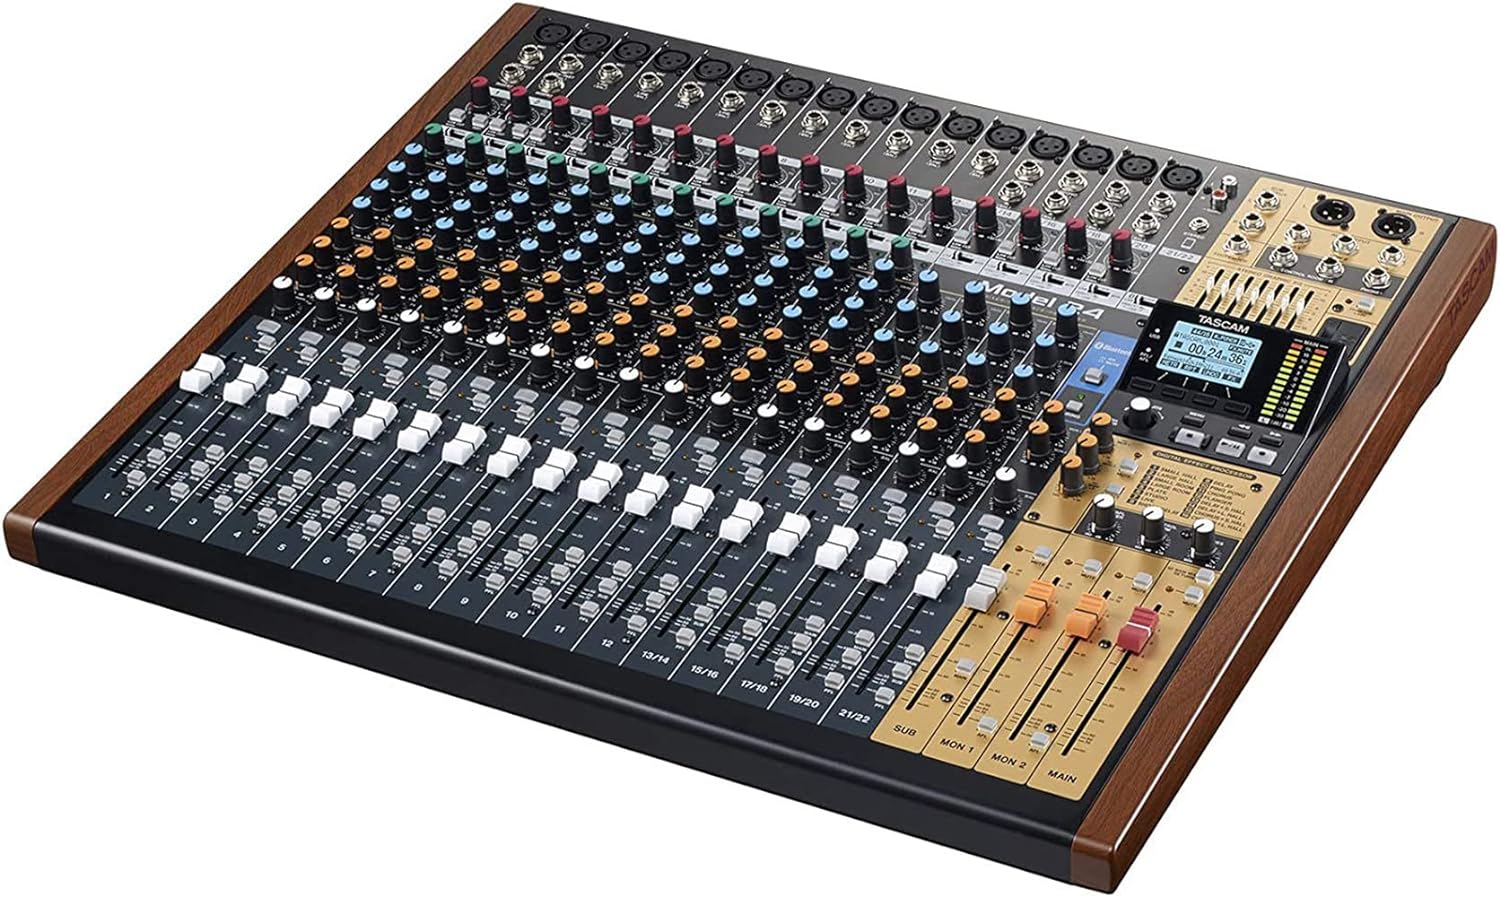 Tascam Model 24 24-track Multi-Track, Live Mixer and Recording Studio, Analog Mixer, Digital Recorder, USB Audio Interface